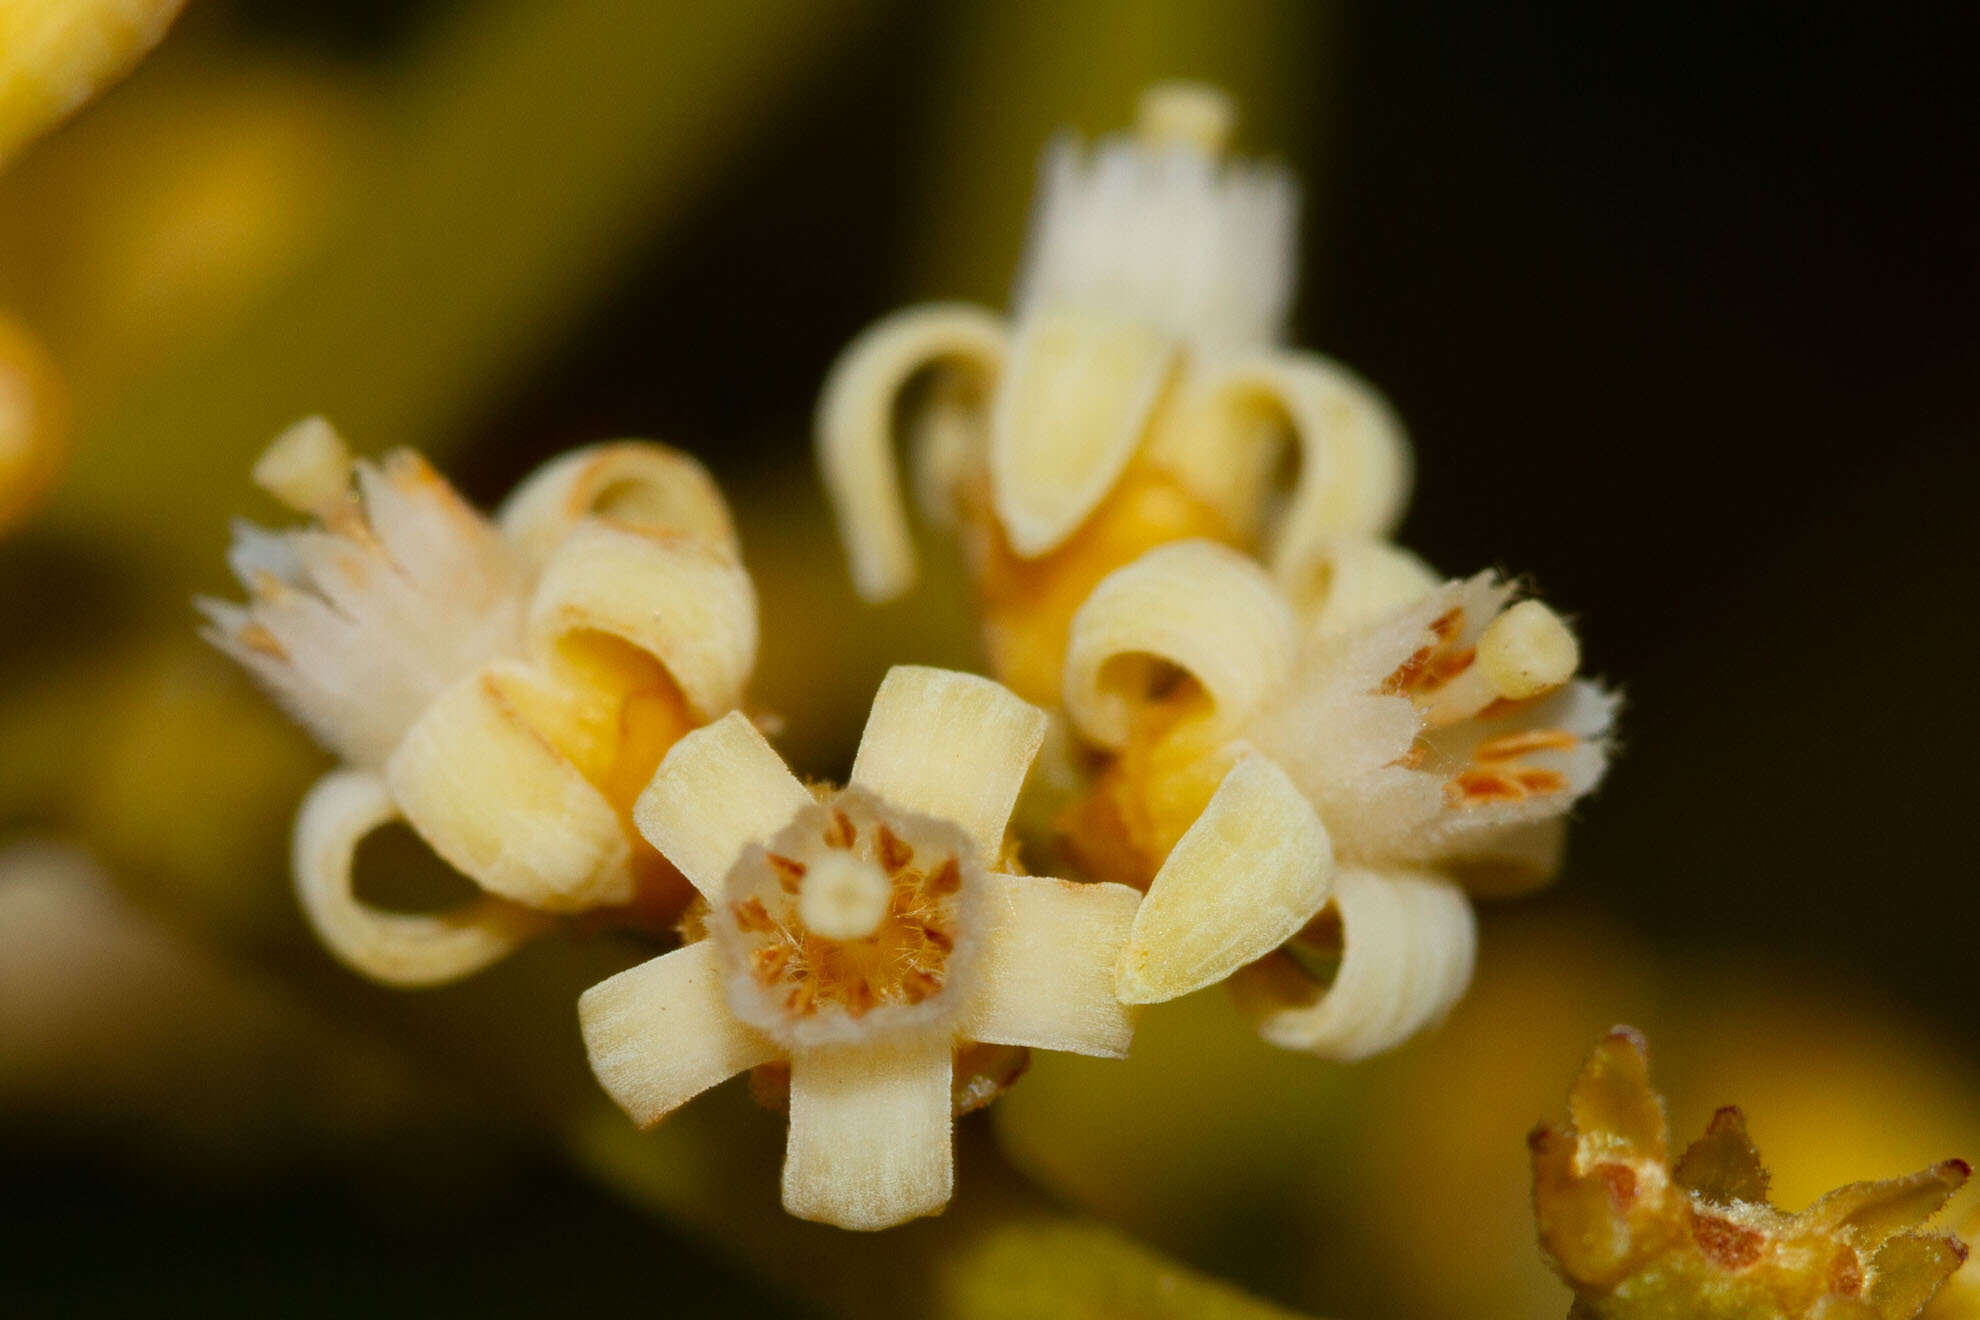 Image of Didymocheton rufescens subsp. rufescens